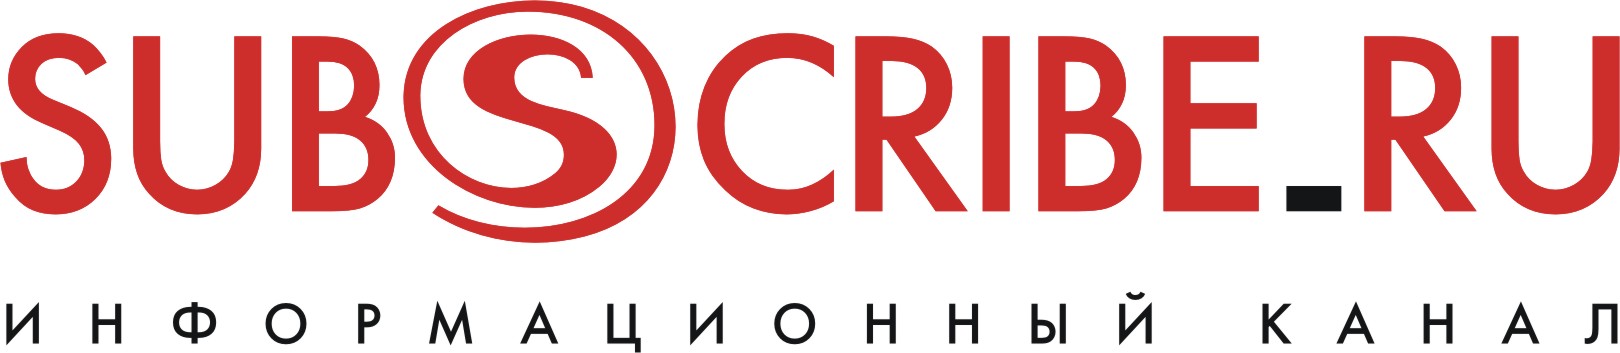 Ttbooking ru. Сабскрайб ру. Subscribe.ru. Subscribe лого. Логотип rucompas.